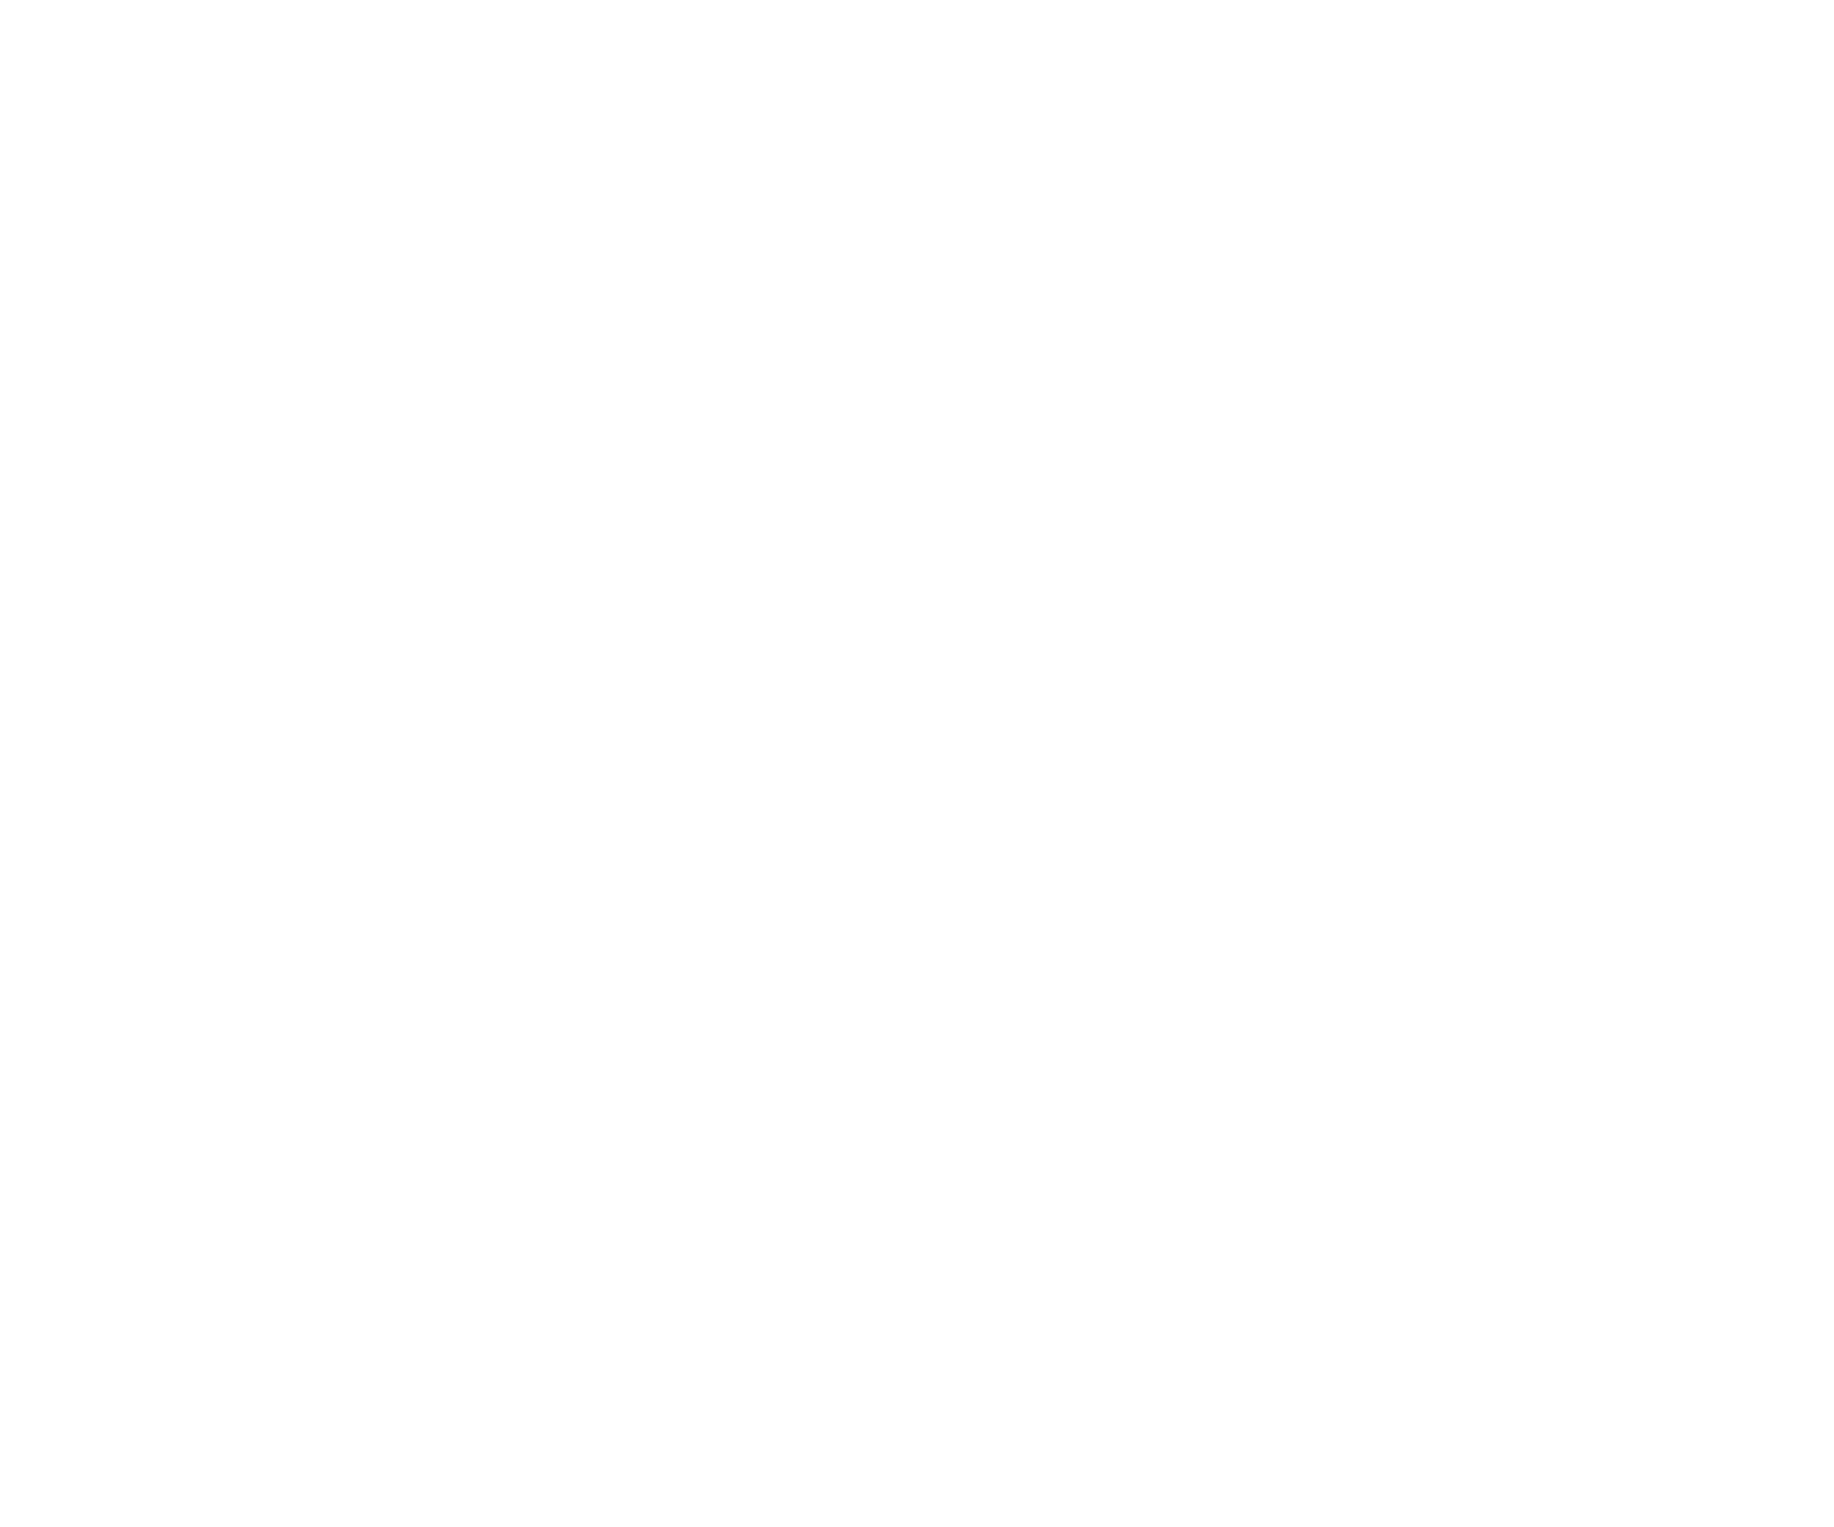 1970s Jazz logo